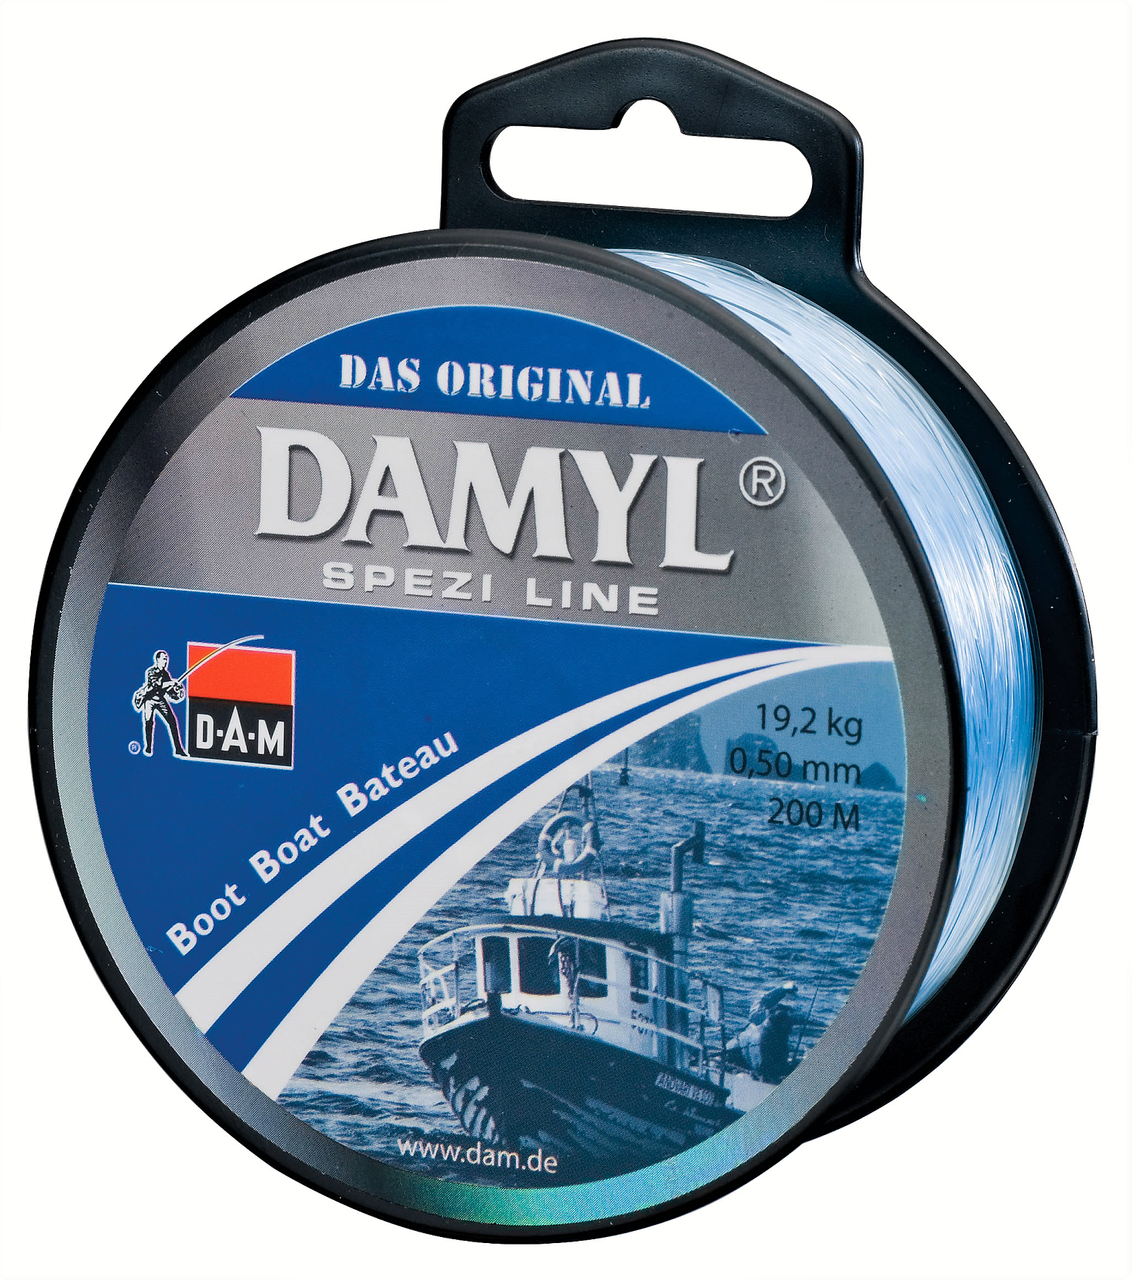 DAM DAMYL SPEZI LINE BOAT 0.40mm (250m spool) Quality Monofilament